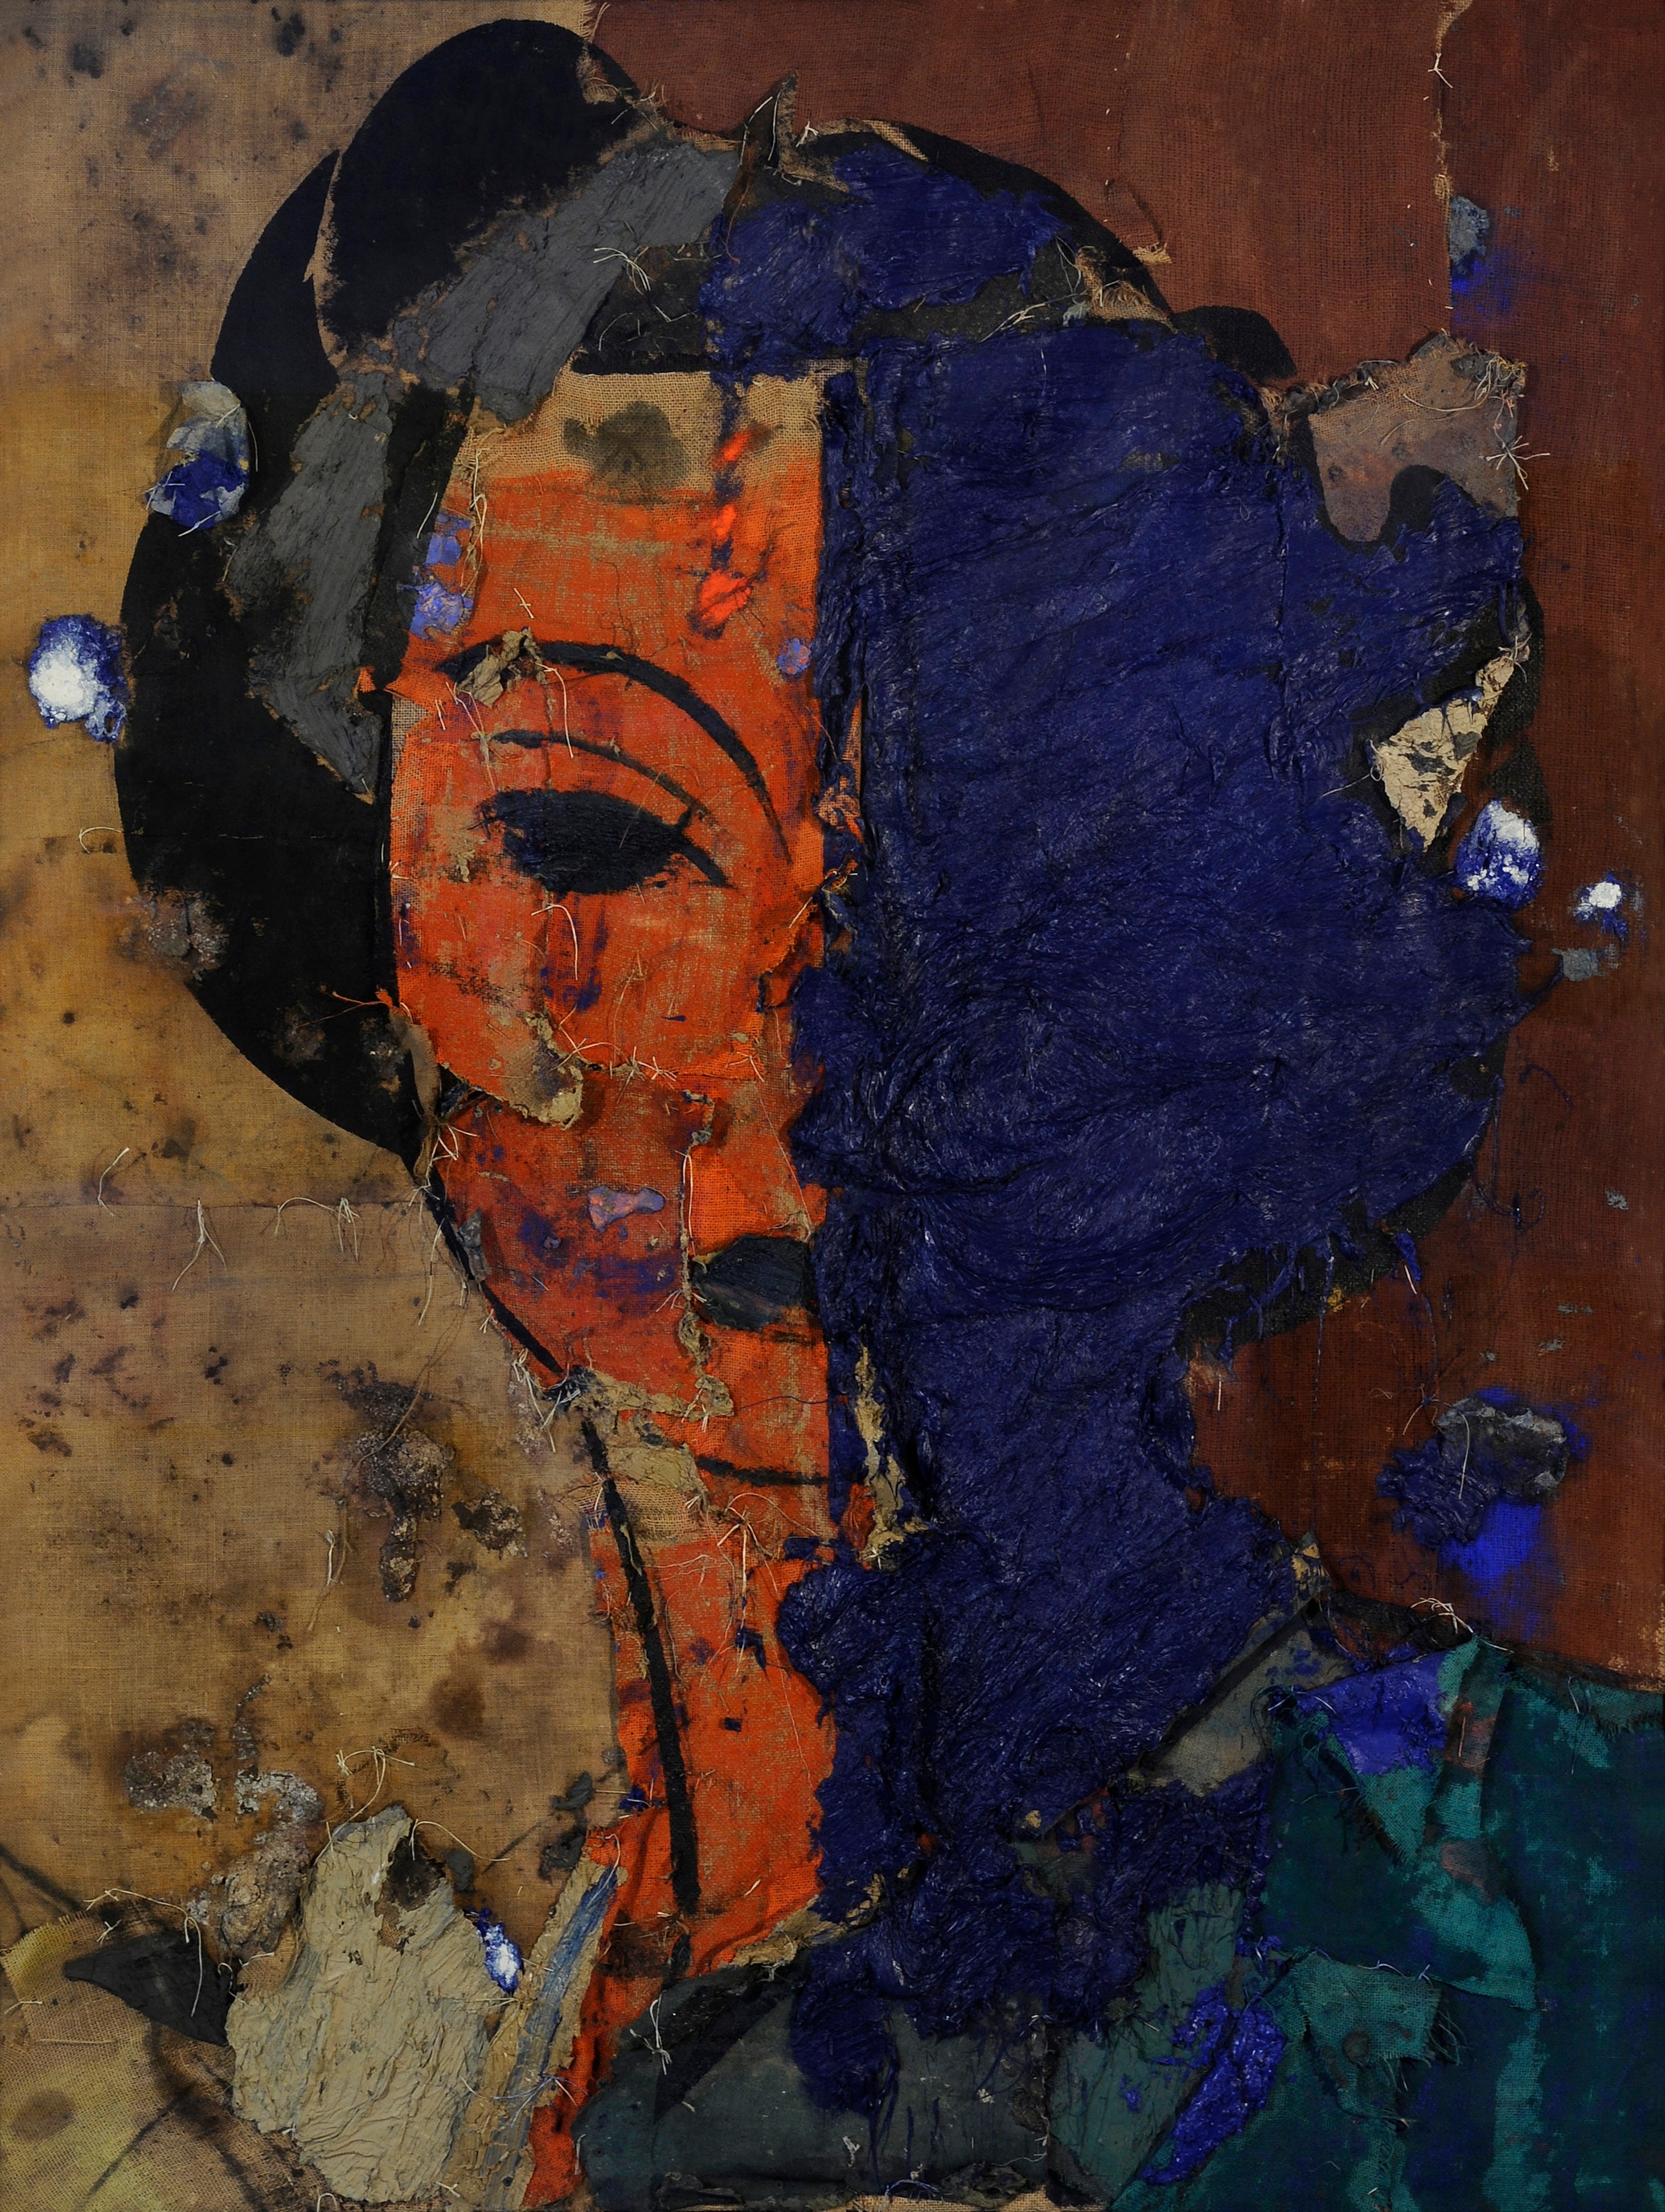 Manolo Valdés: Retrato con rostro naranja y azul, 1999, olio su tela, cm 190 x 141 Collezione Privata Stefano Contini ©Manolo Valdés by SIAE 2020